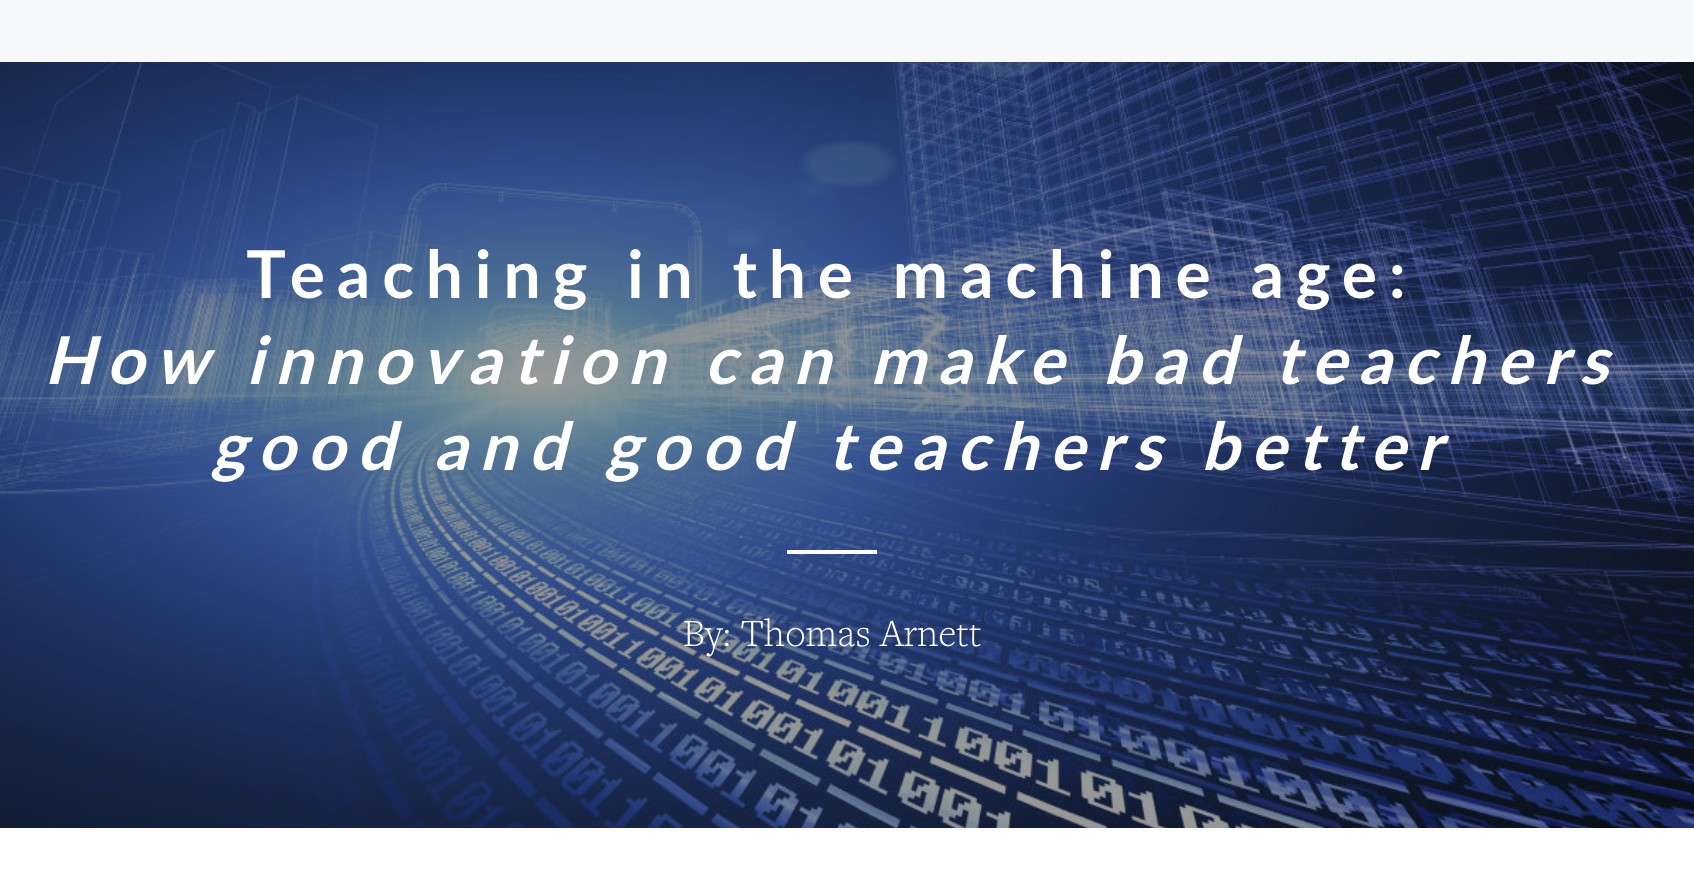 Teaching in the machine age